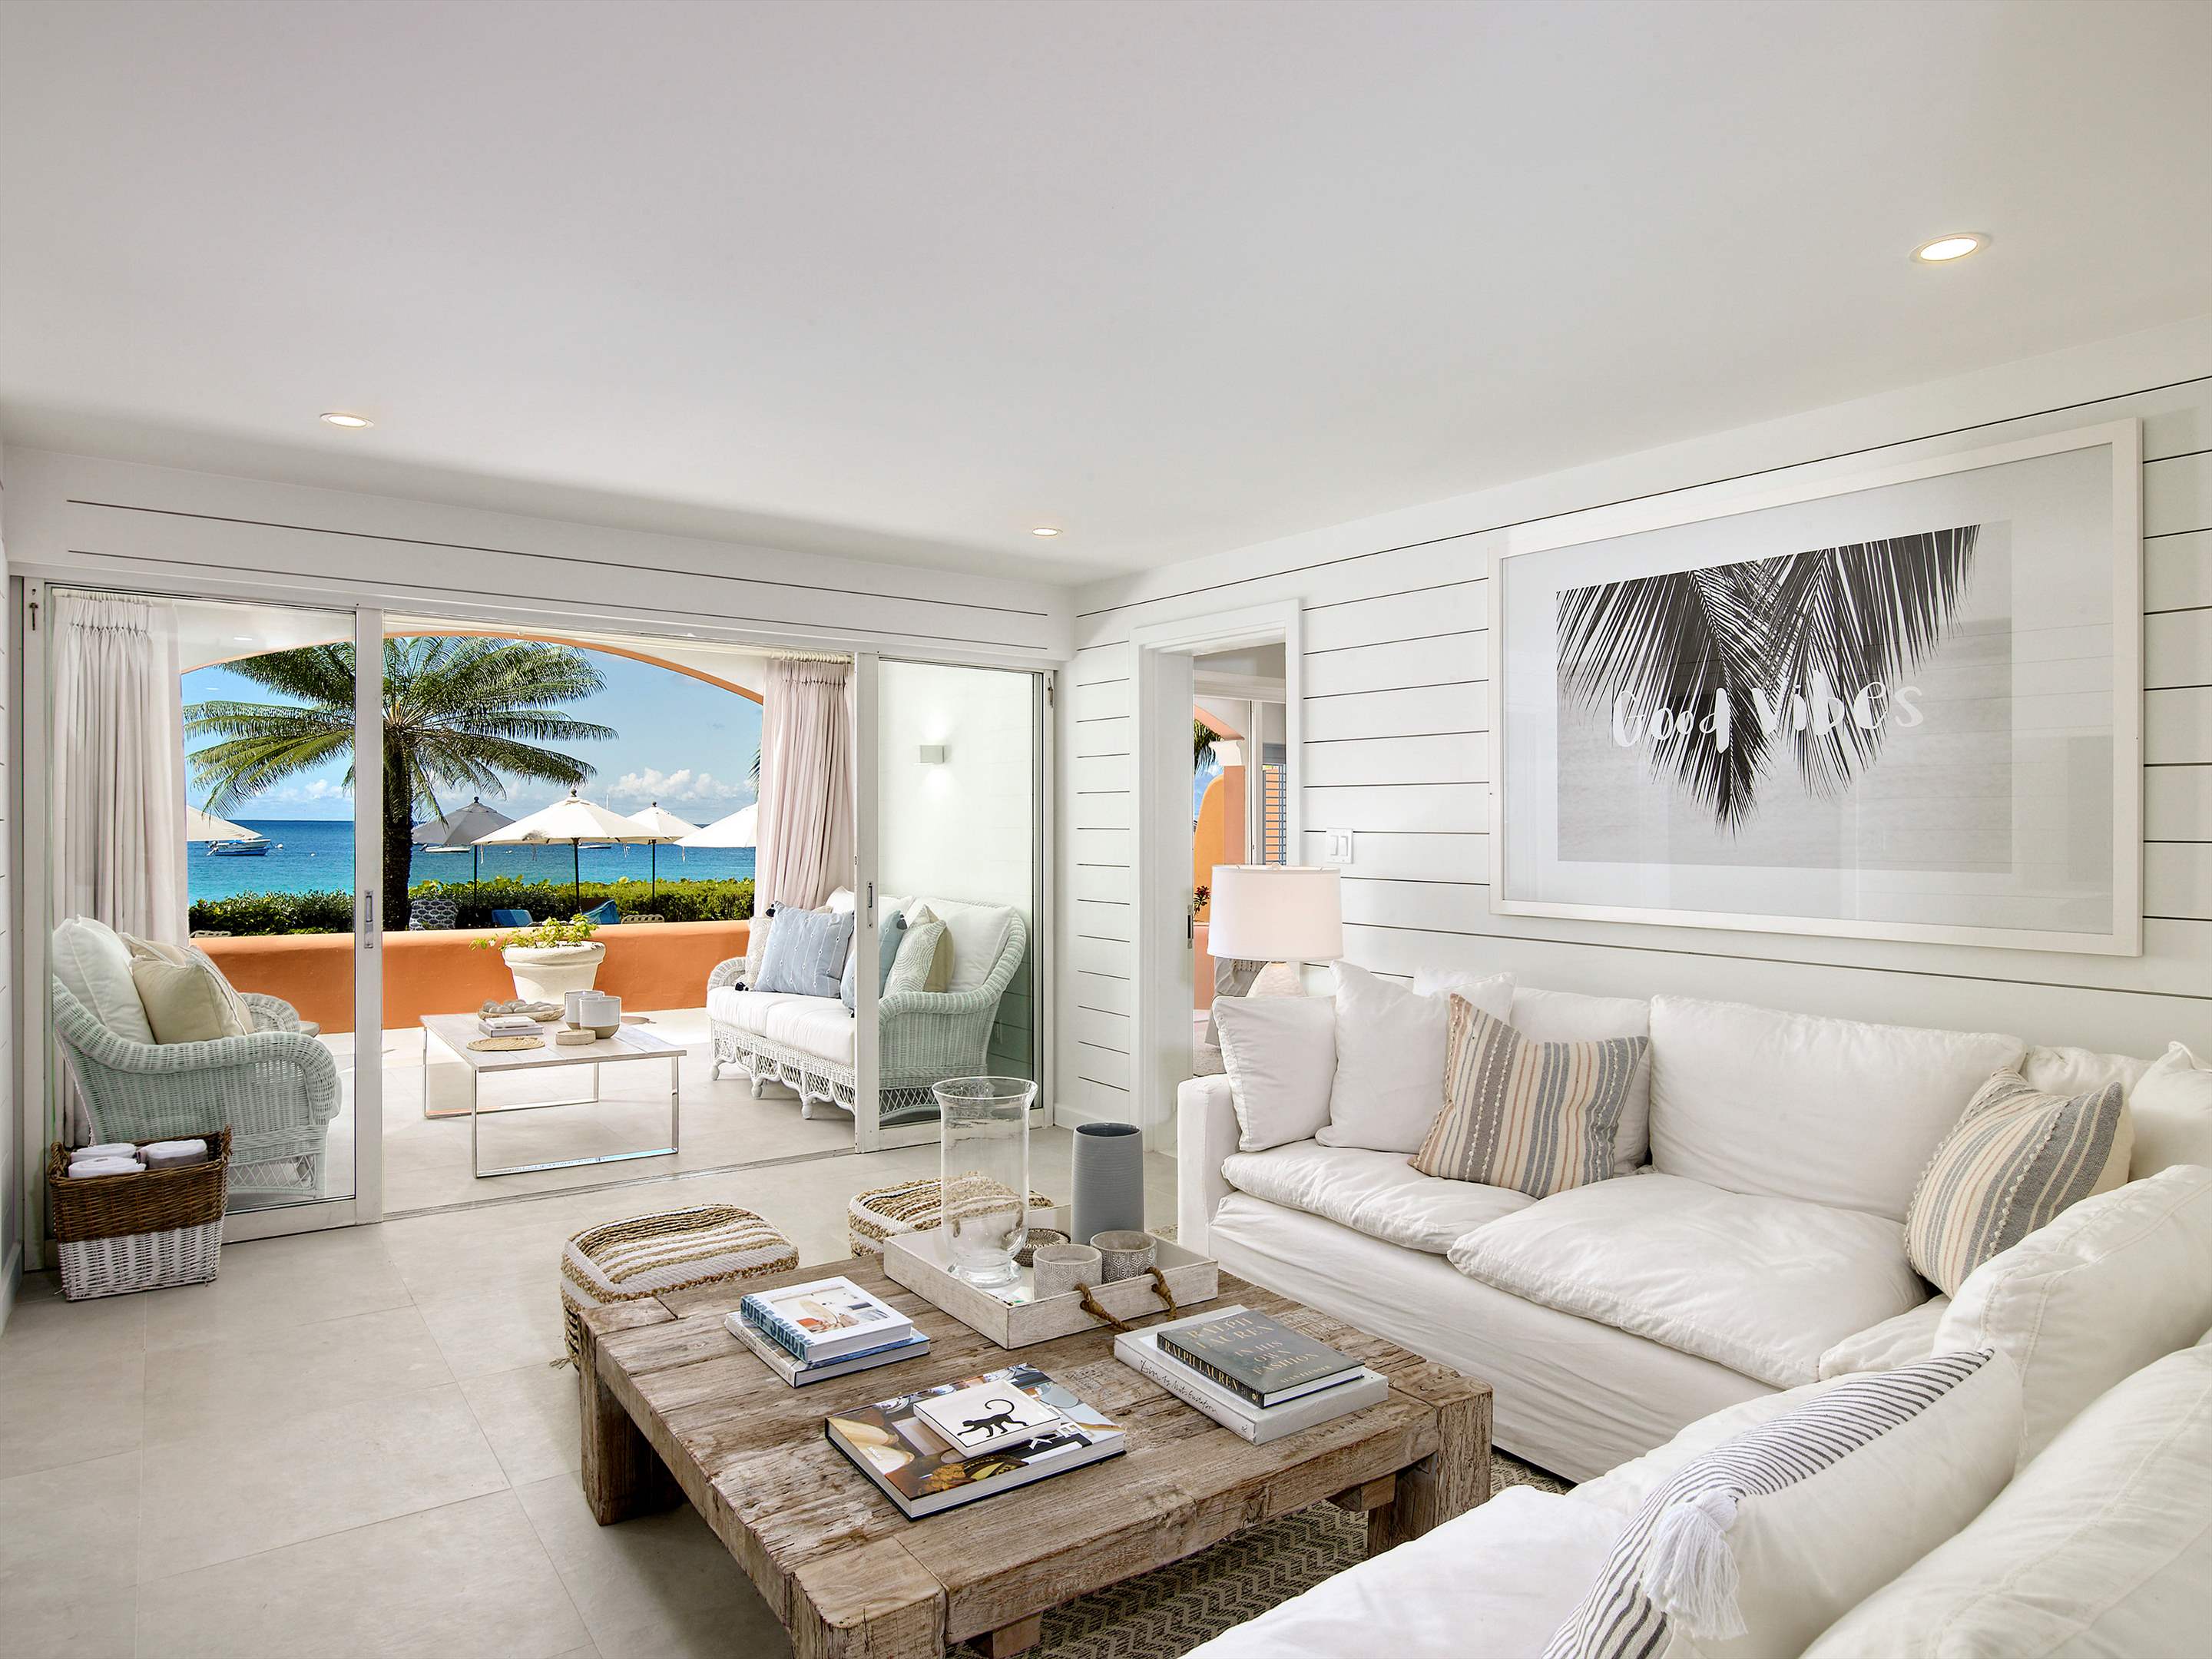 Villas on the Beach 102 , 3 bedroom, 3 bedroom apartment in St. James & West Coast, Barbados Photo #3